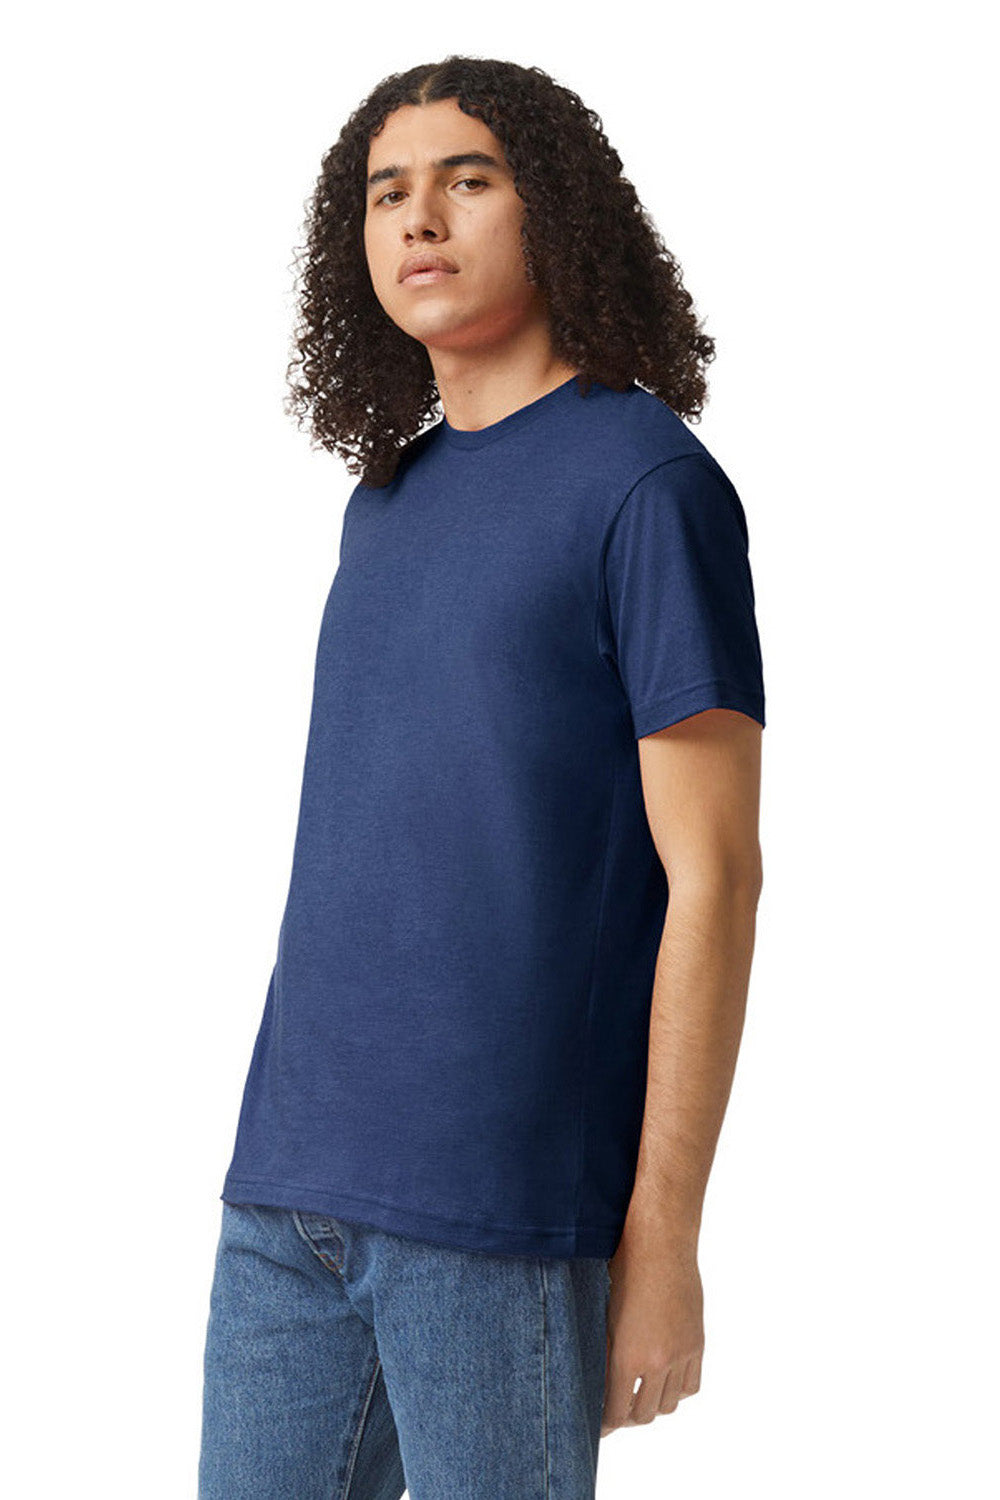 American Apparel 2001CVC Mens CVC Short Sleeve Crewneck T-Shirt Heather Indigo Blue Model Side